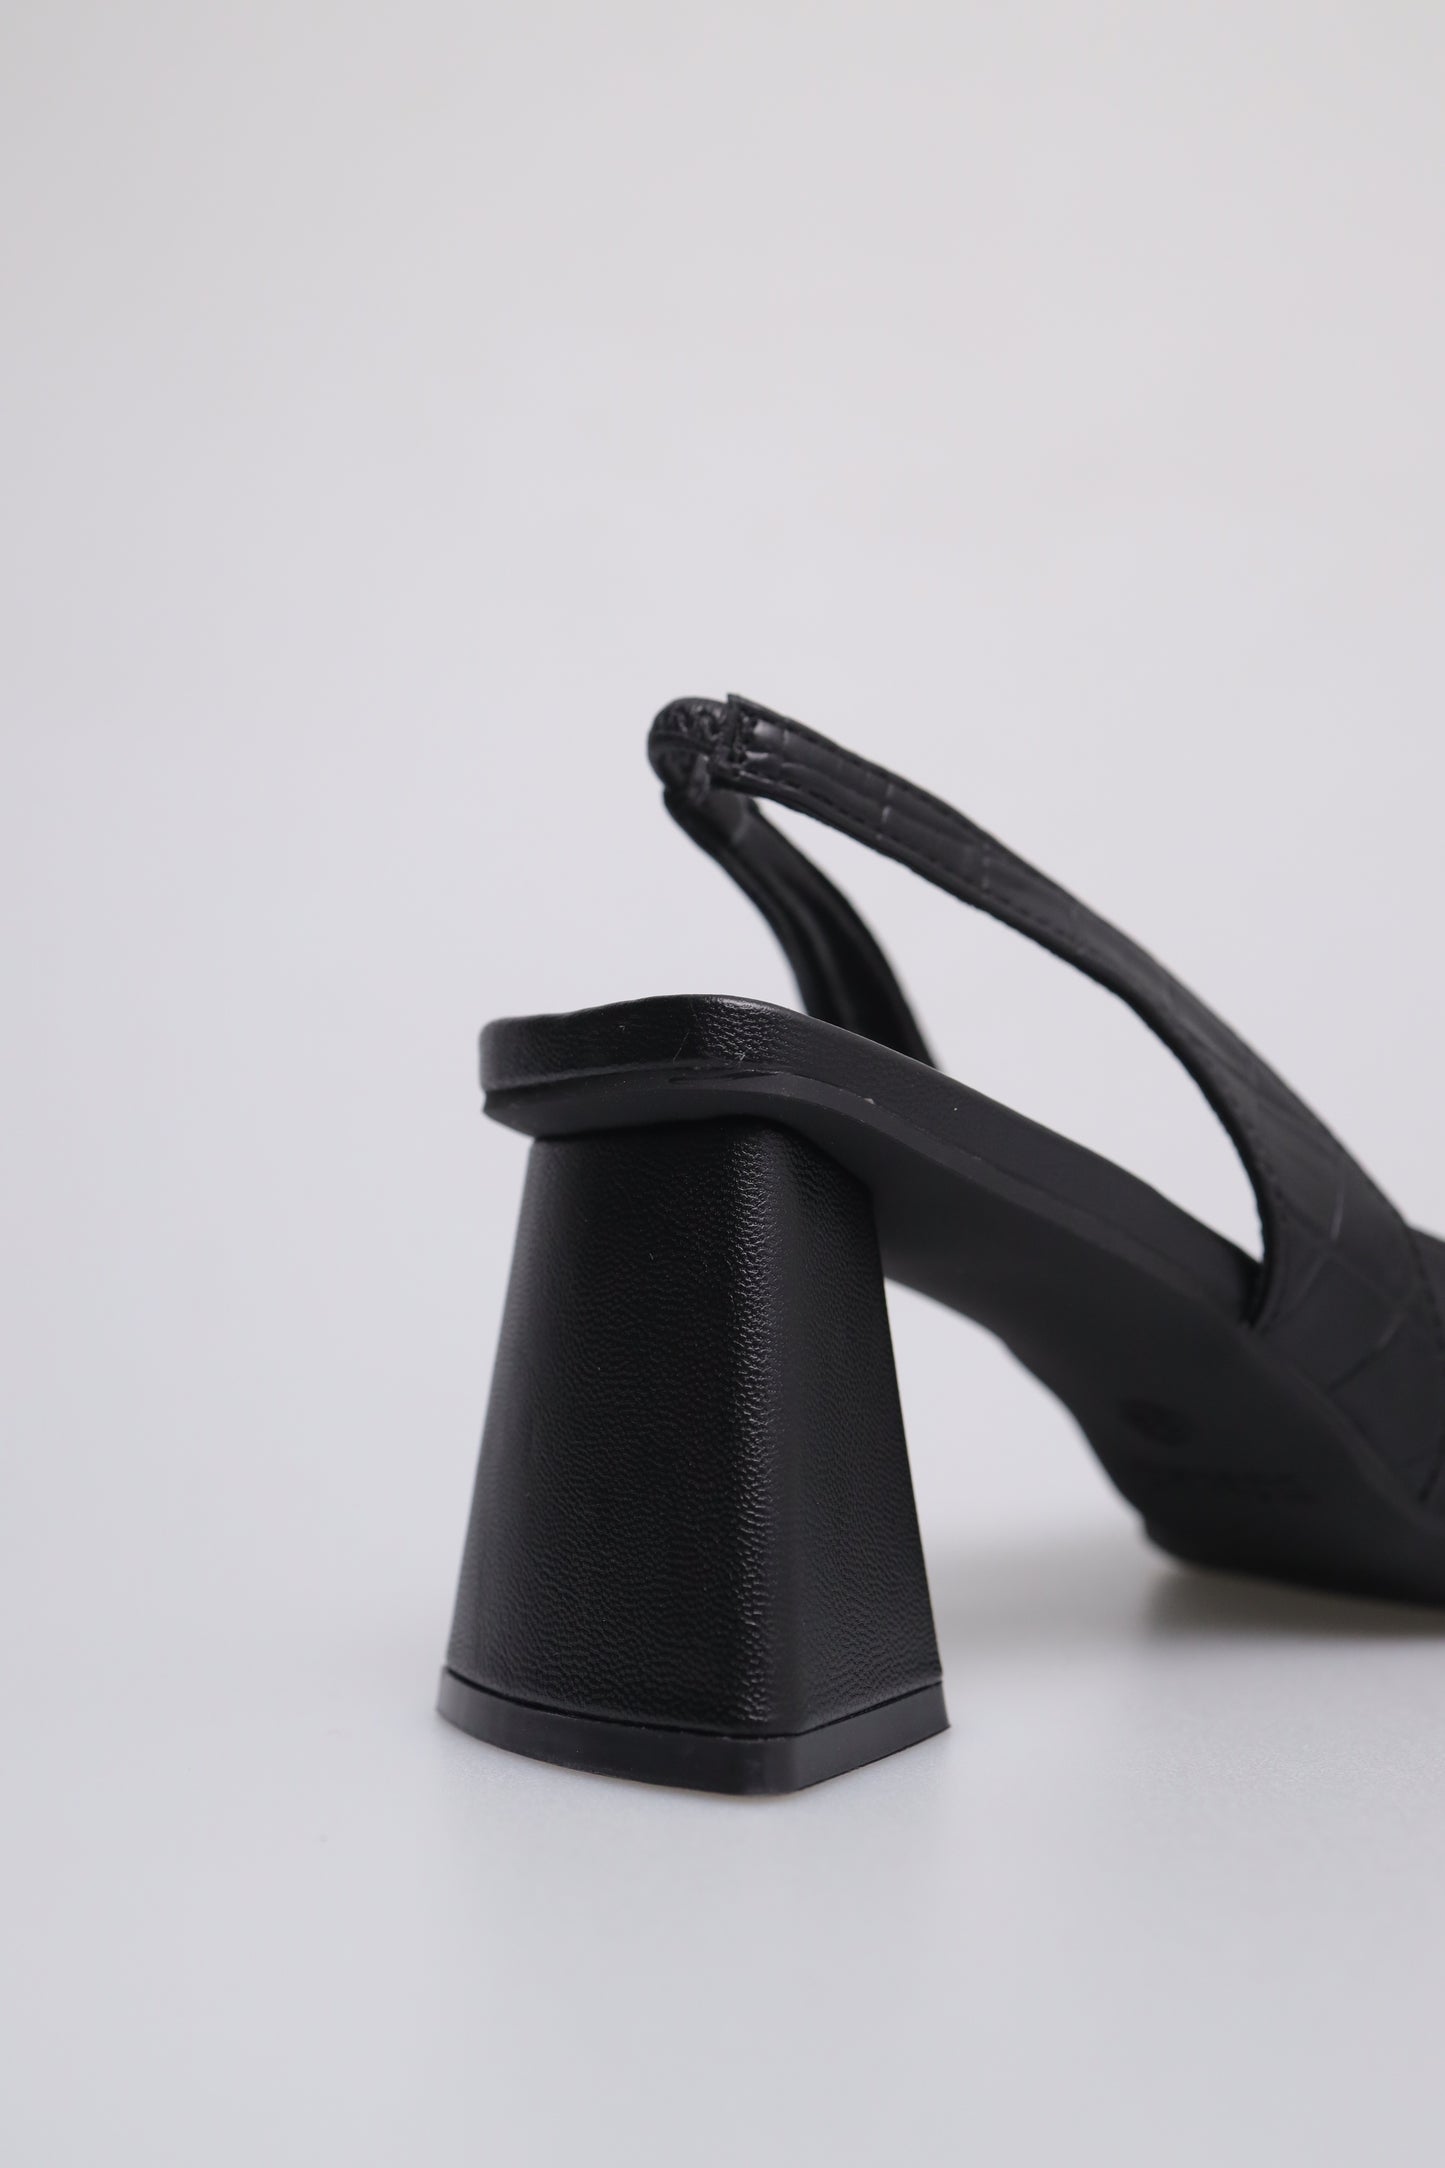 Tomaz FL047 Ladies Pointed Toe Slingback Heels (Black)